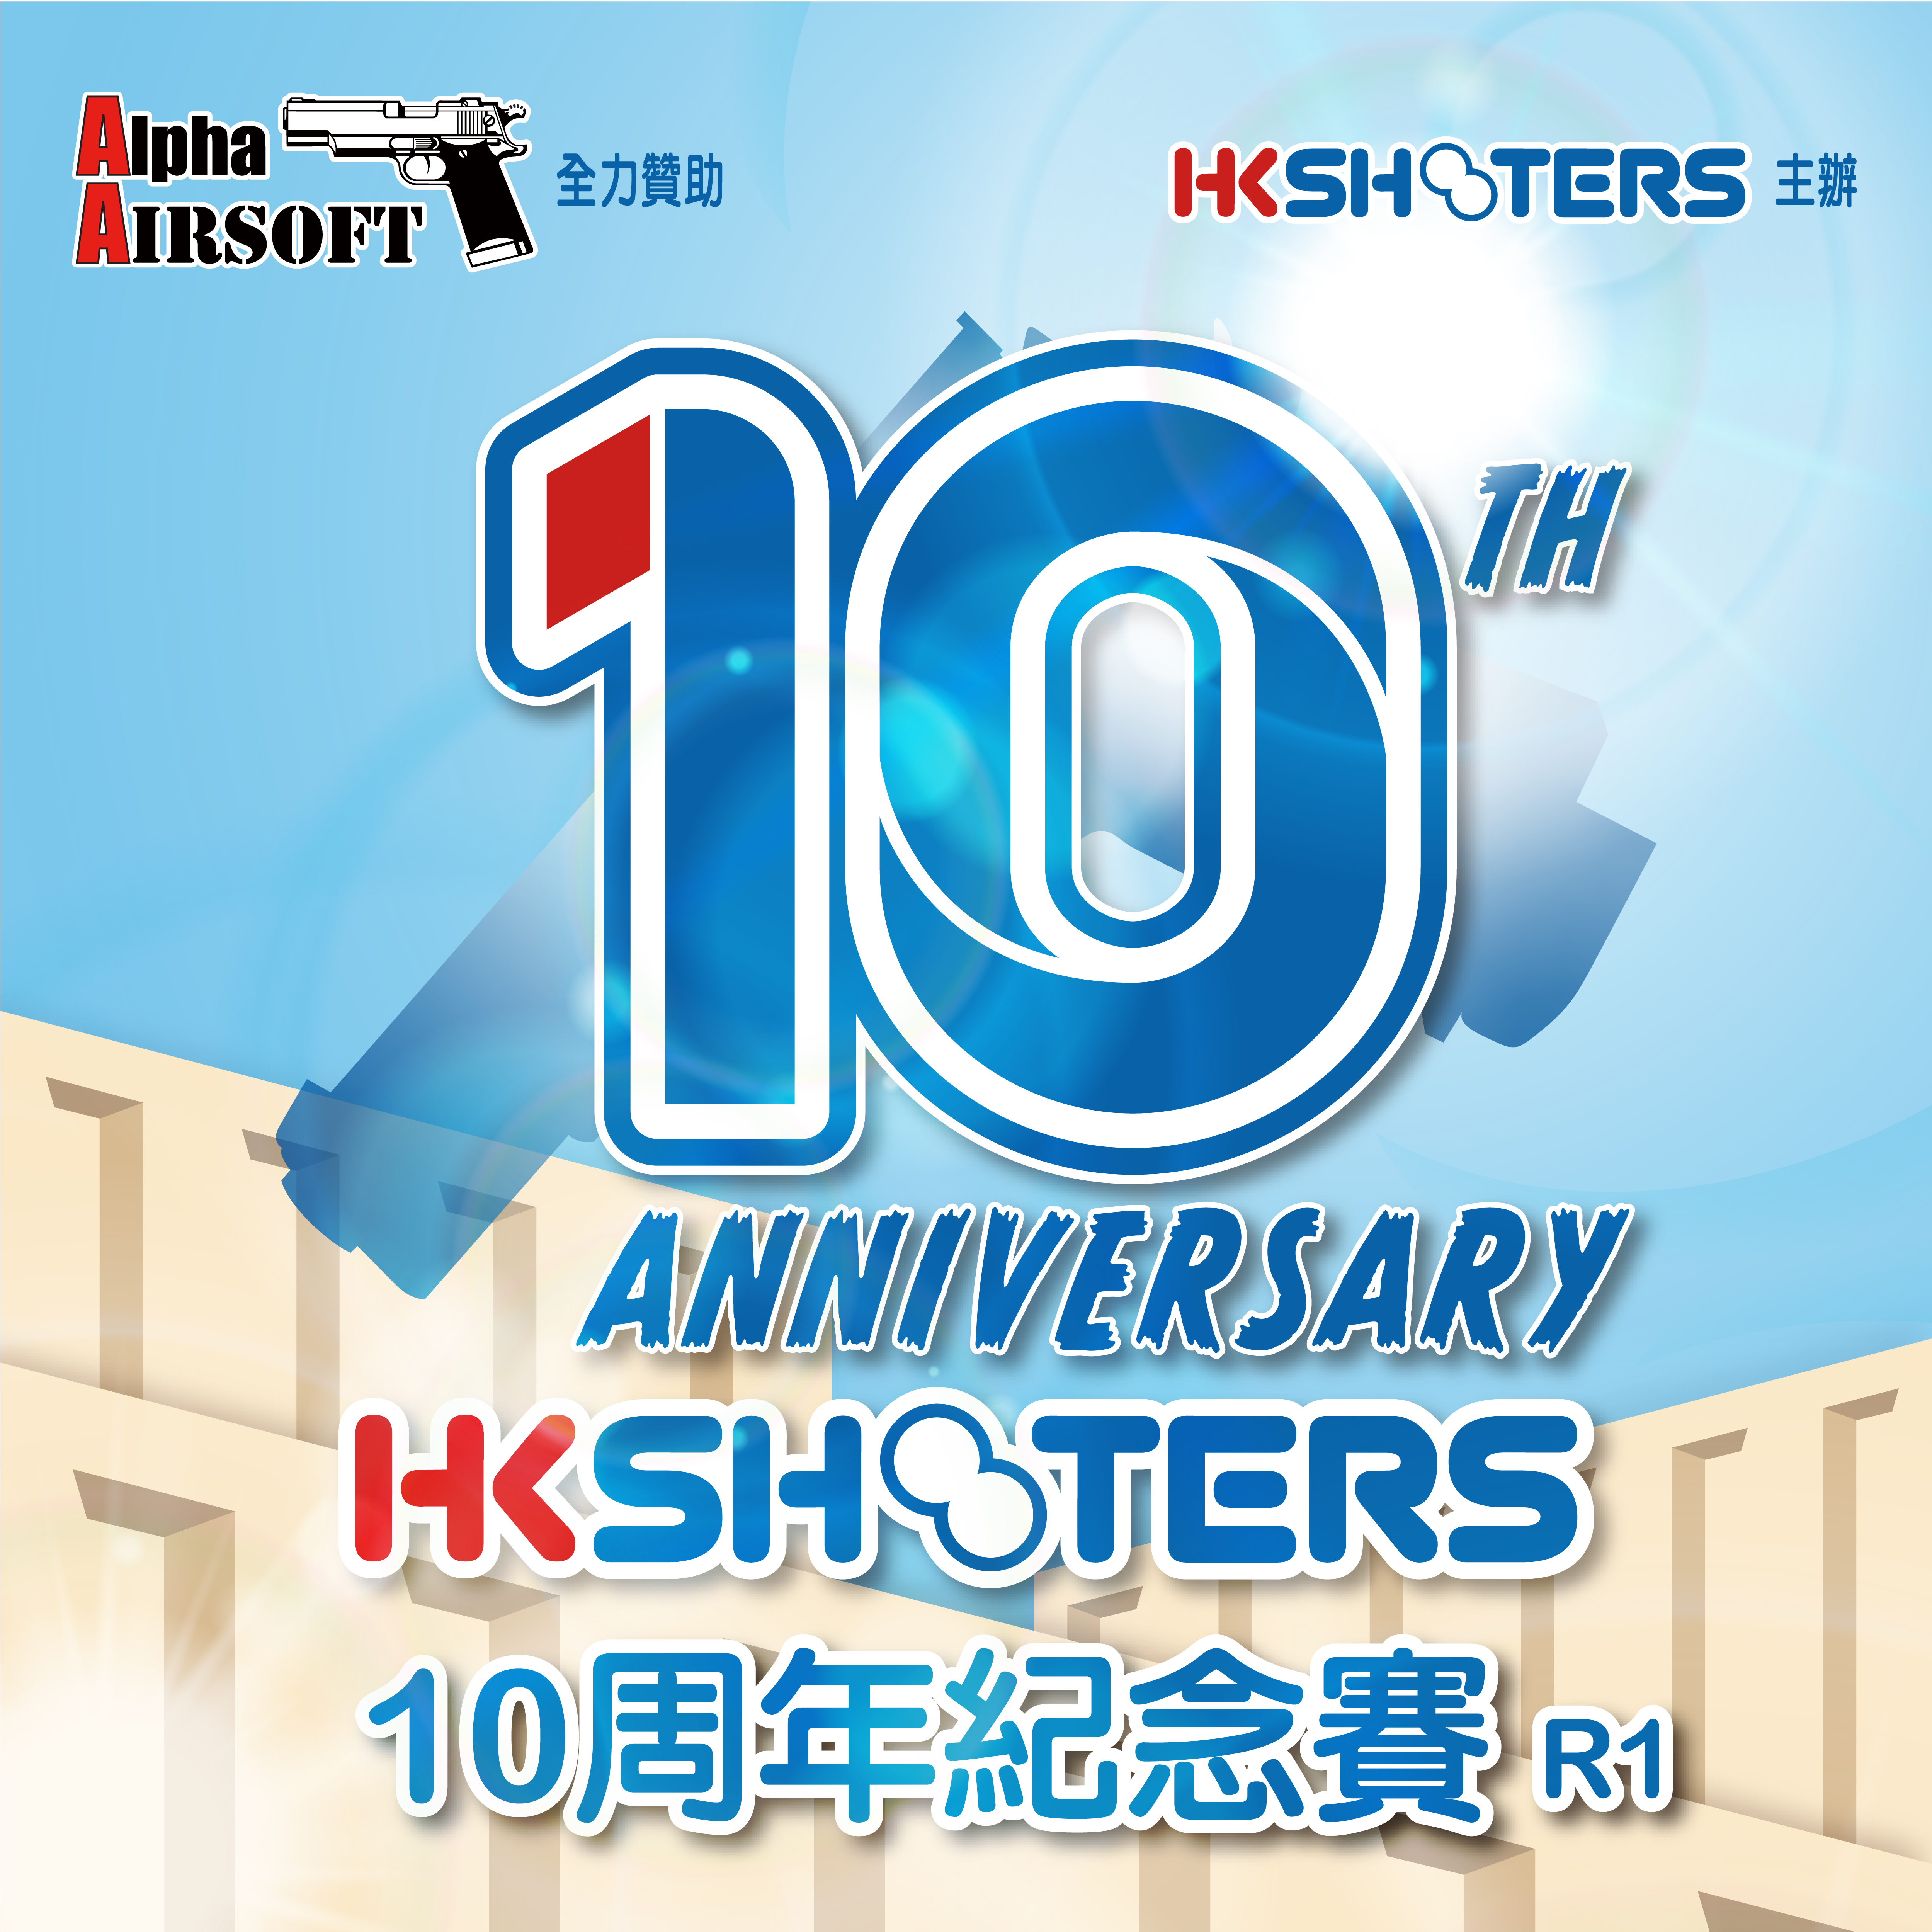 HKSHOOTERS 10周年紀念賽 第一回合 HKSHOOTERS 10th Anniversary Match Round 1